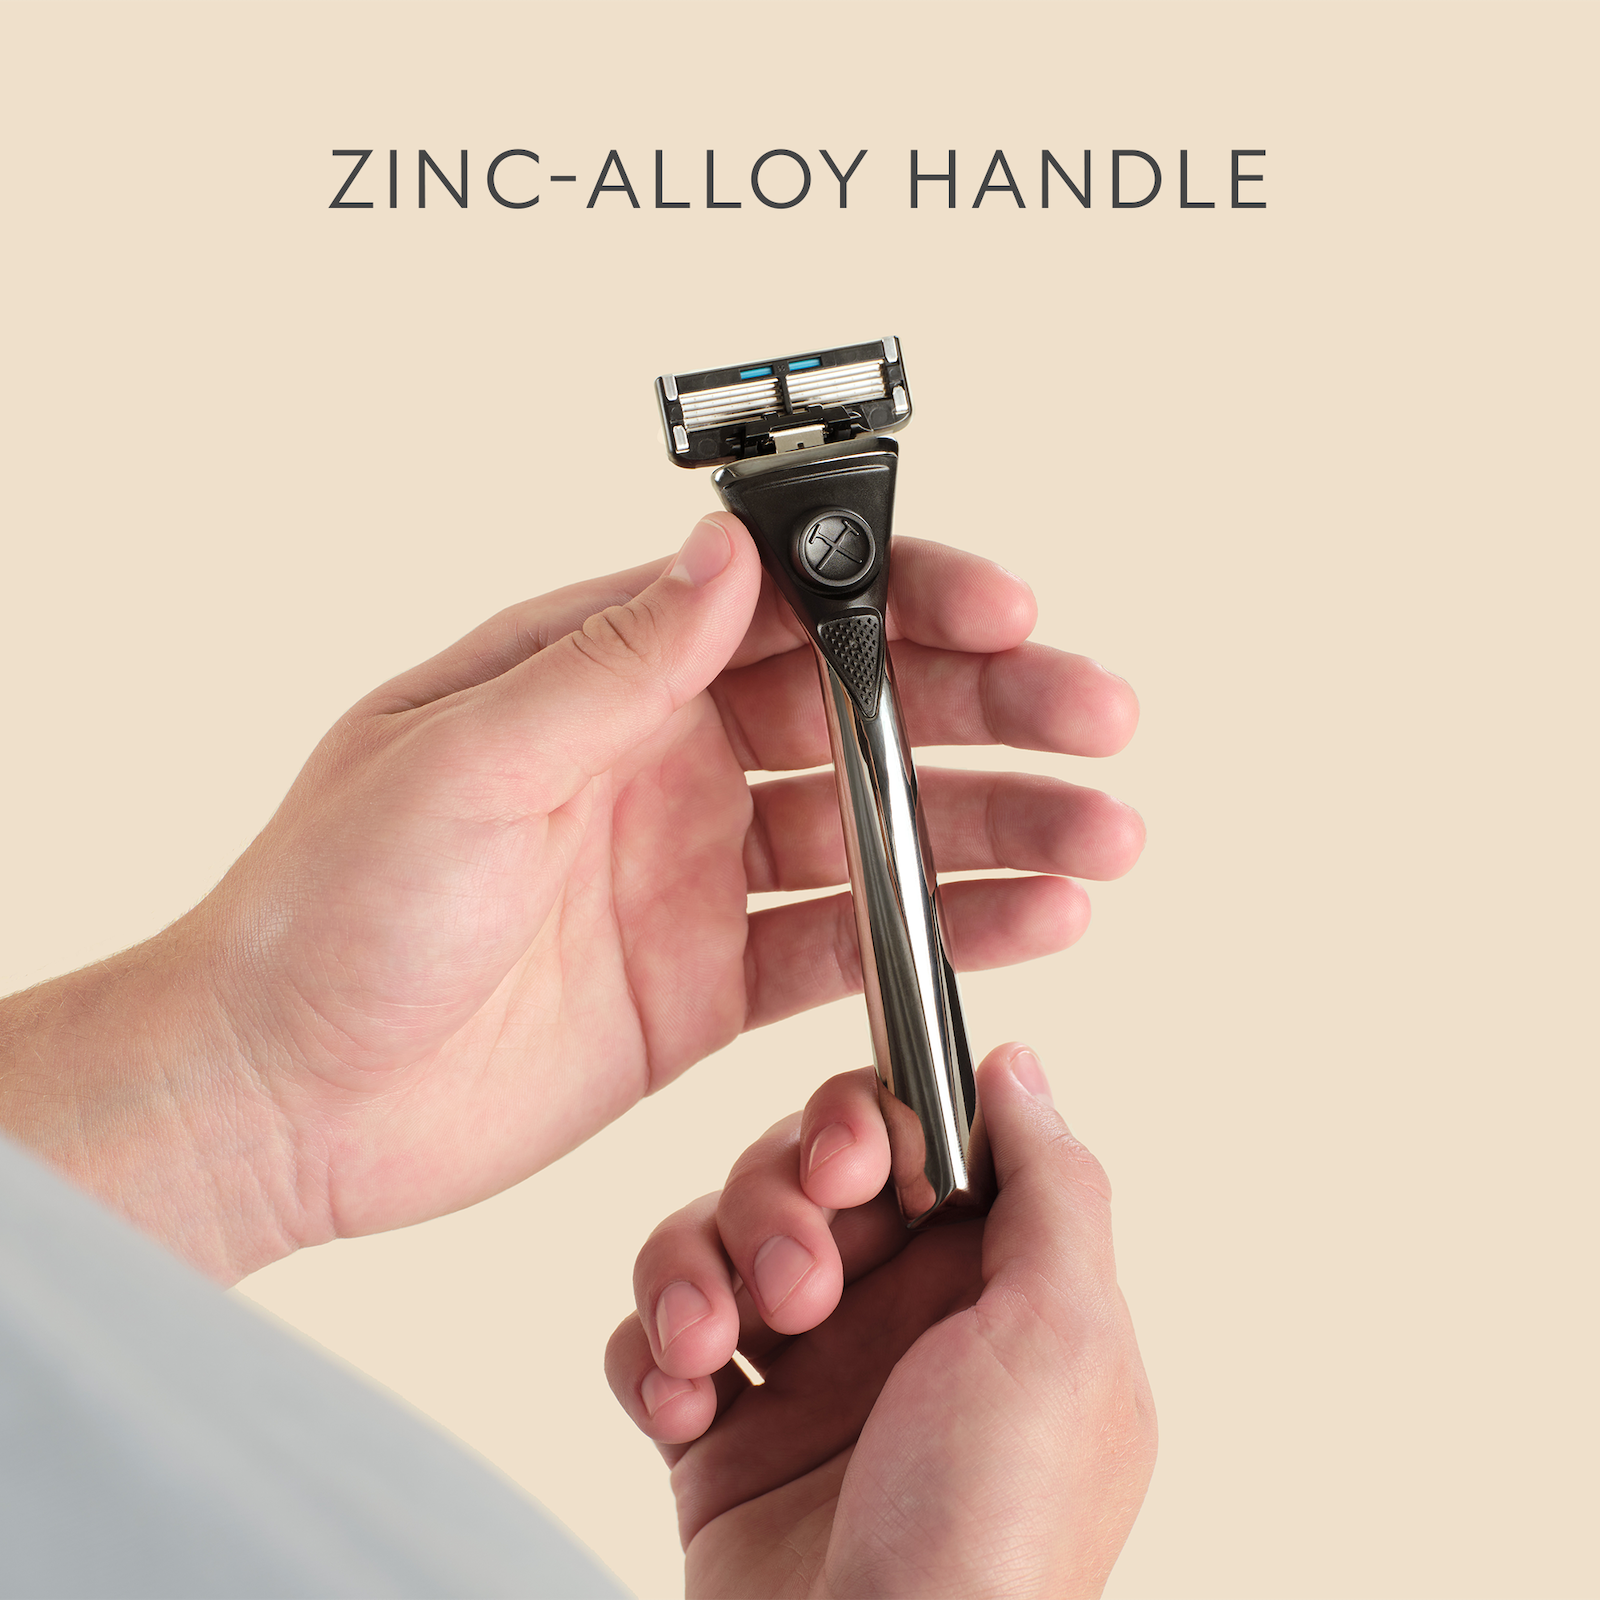 Dollar Shave Club Heavy Metal Handle features a zinc-alloy handle.